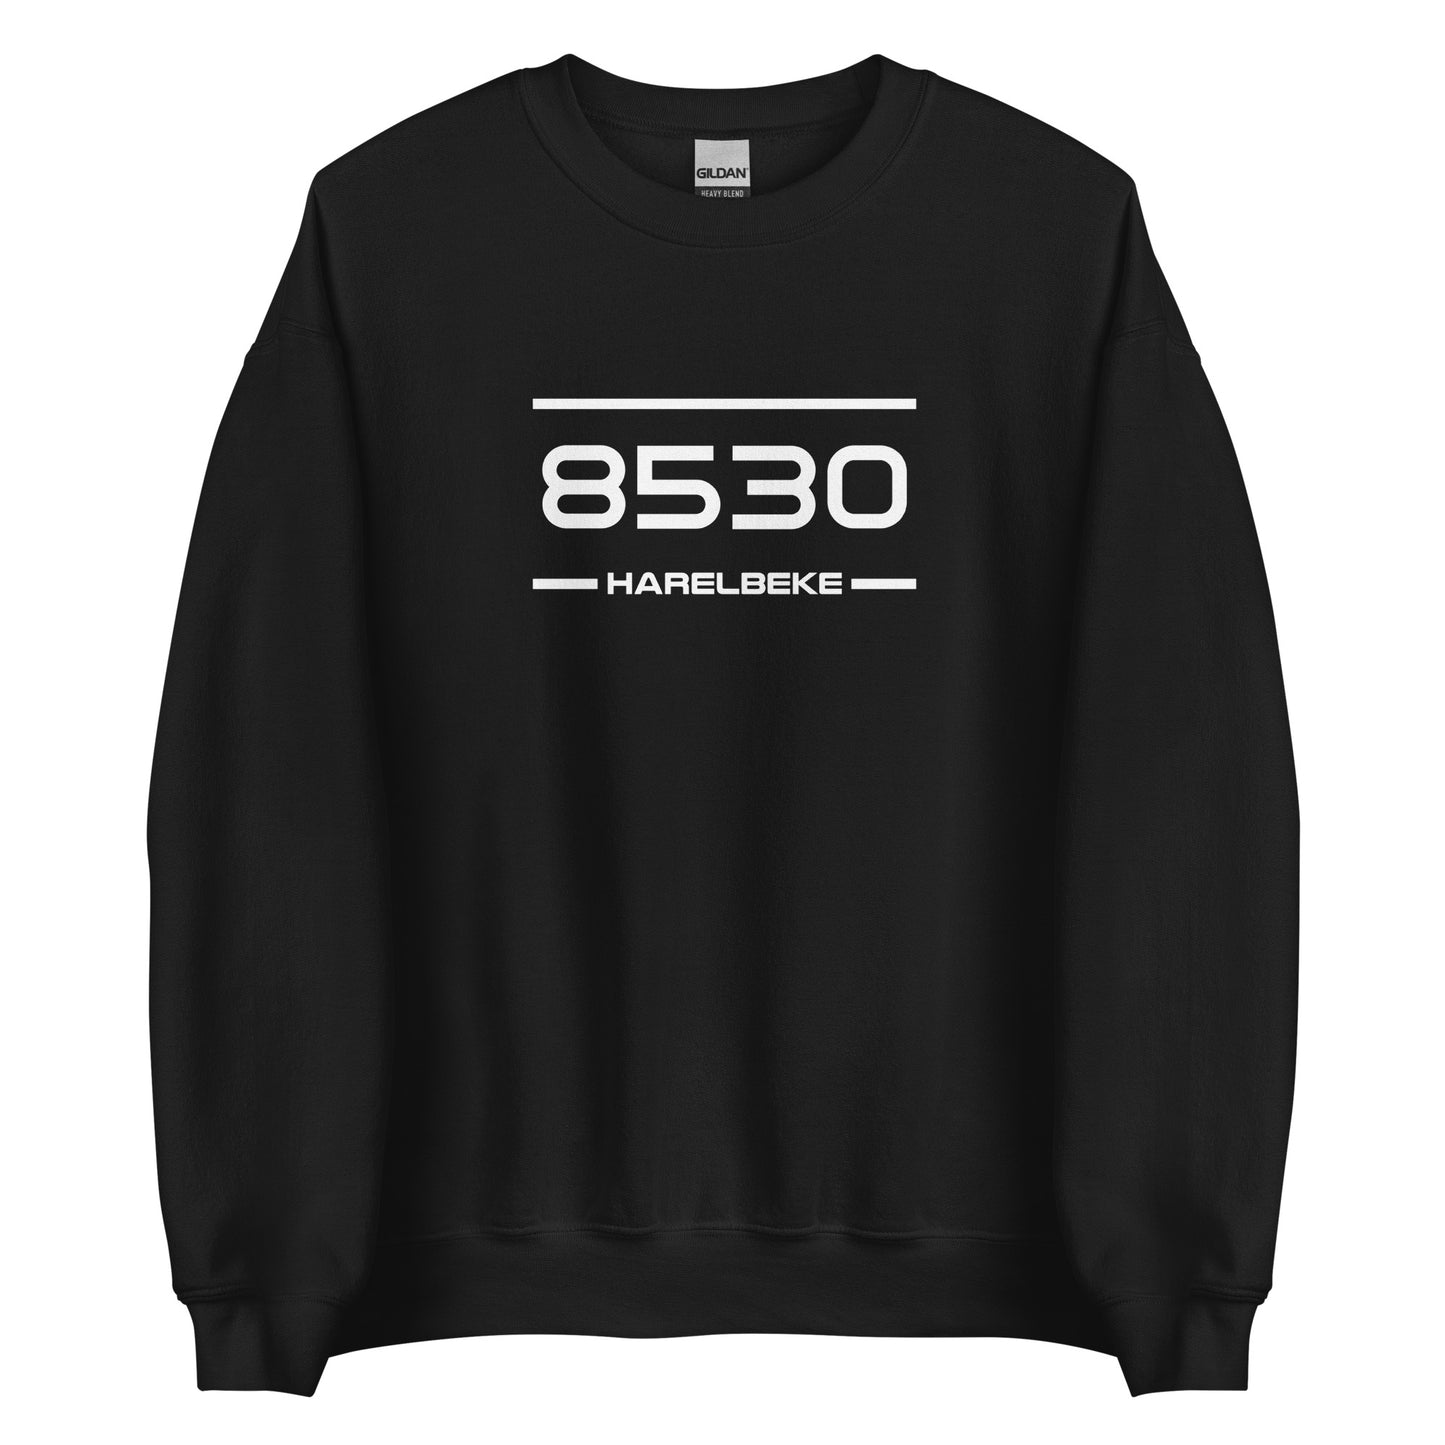 Sweater - 8530 - Harelbeke (M/V)